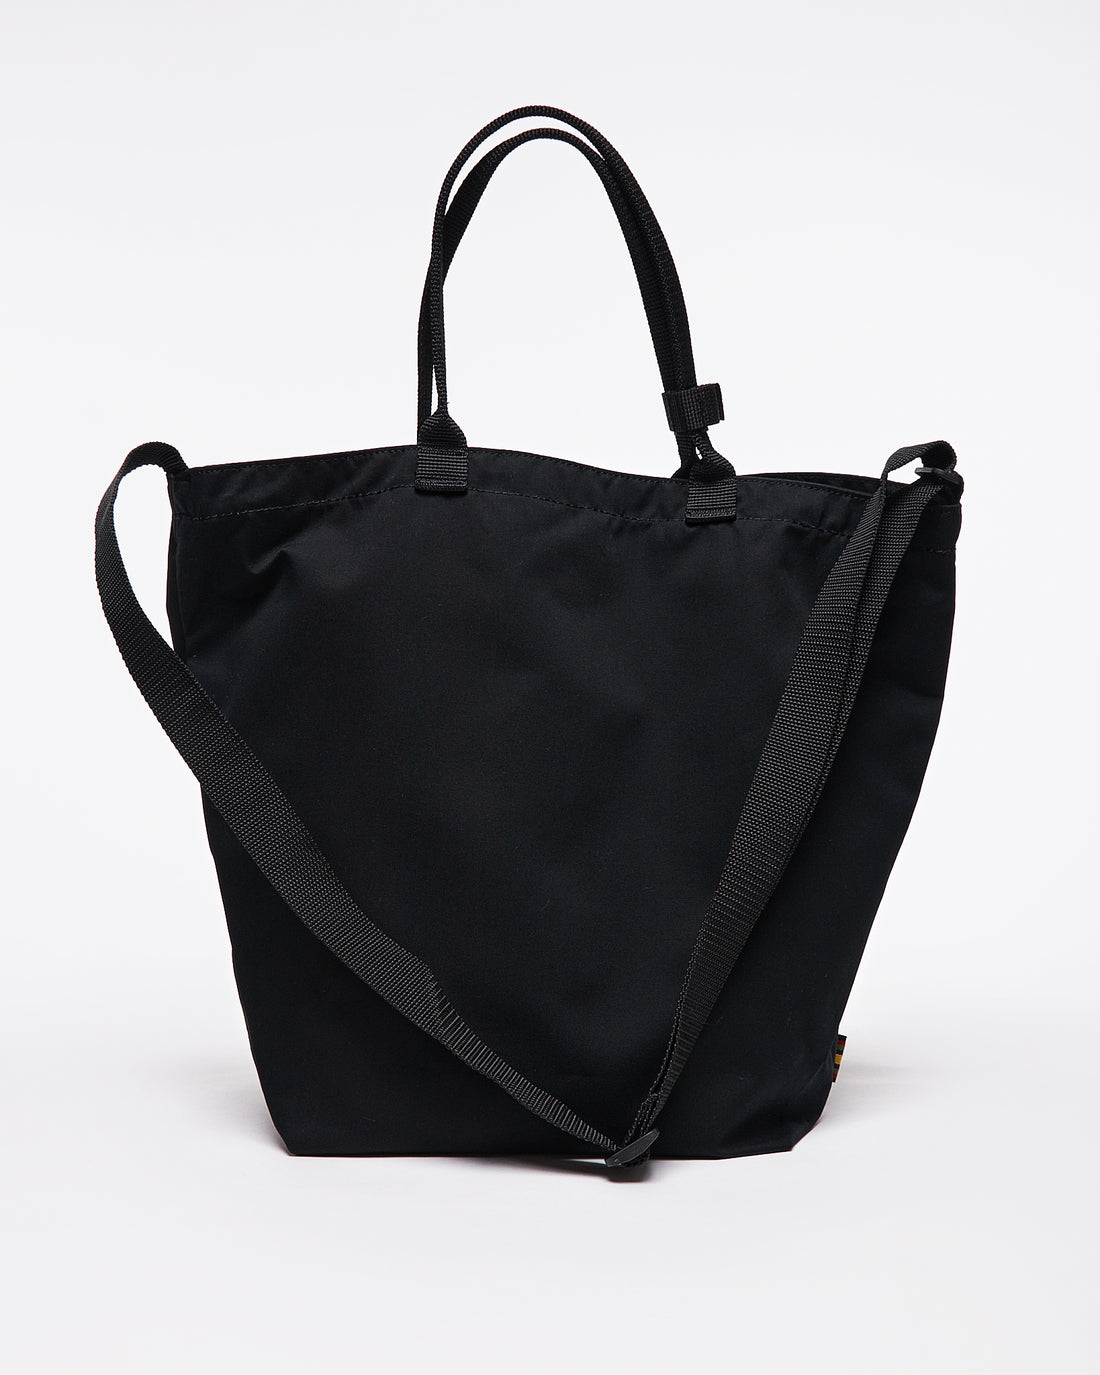 FJA Lady Black Tote Bag 44.90